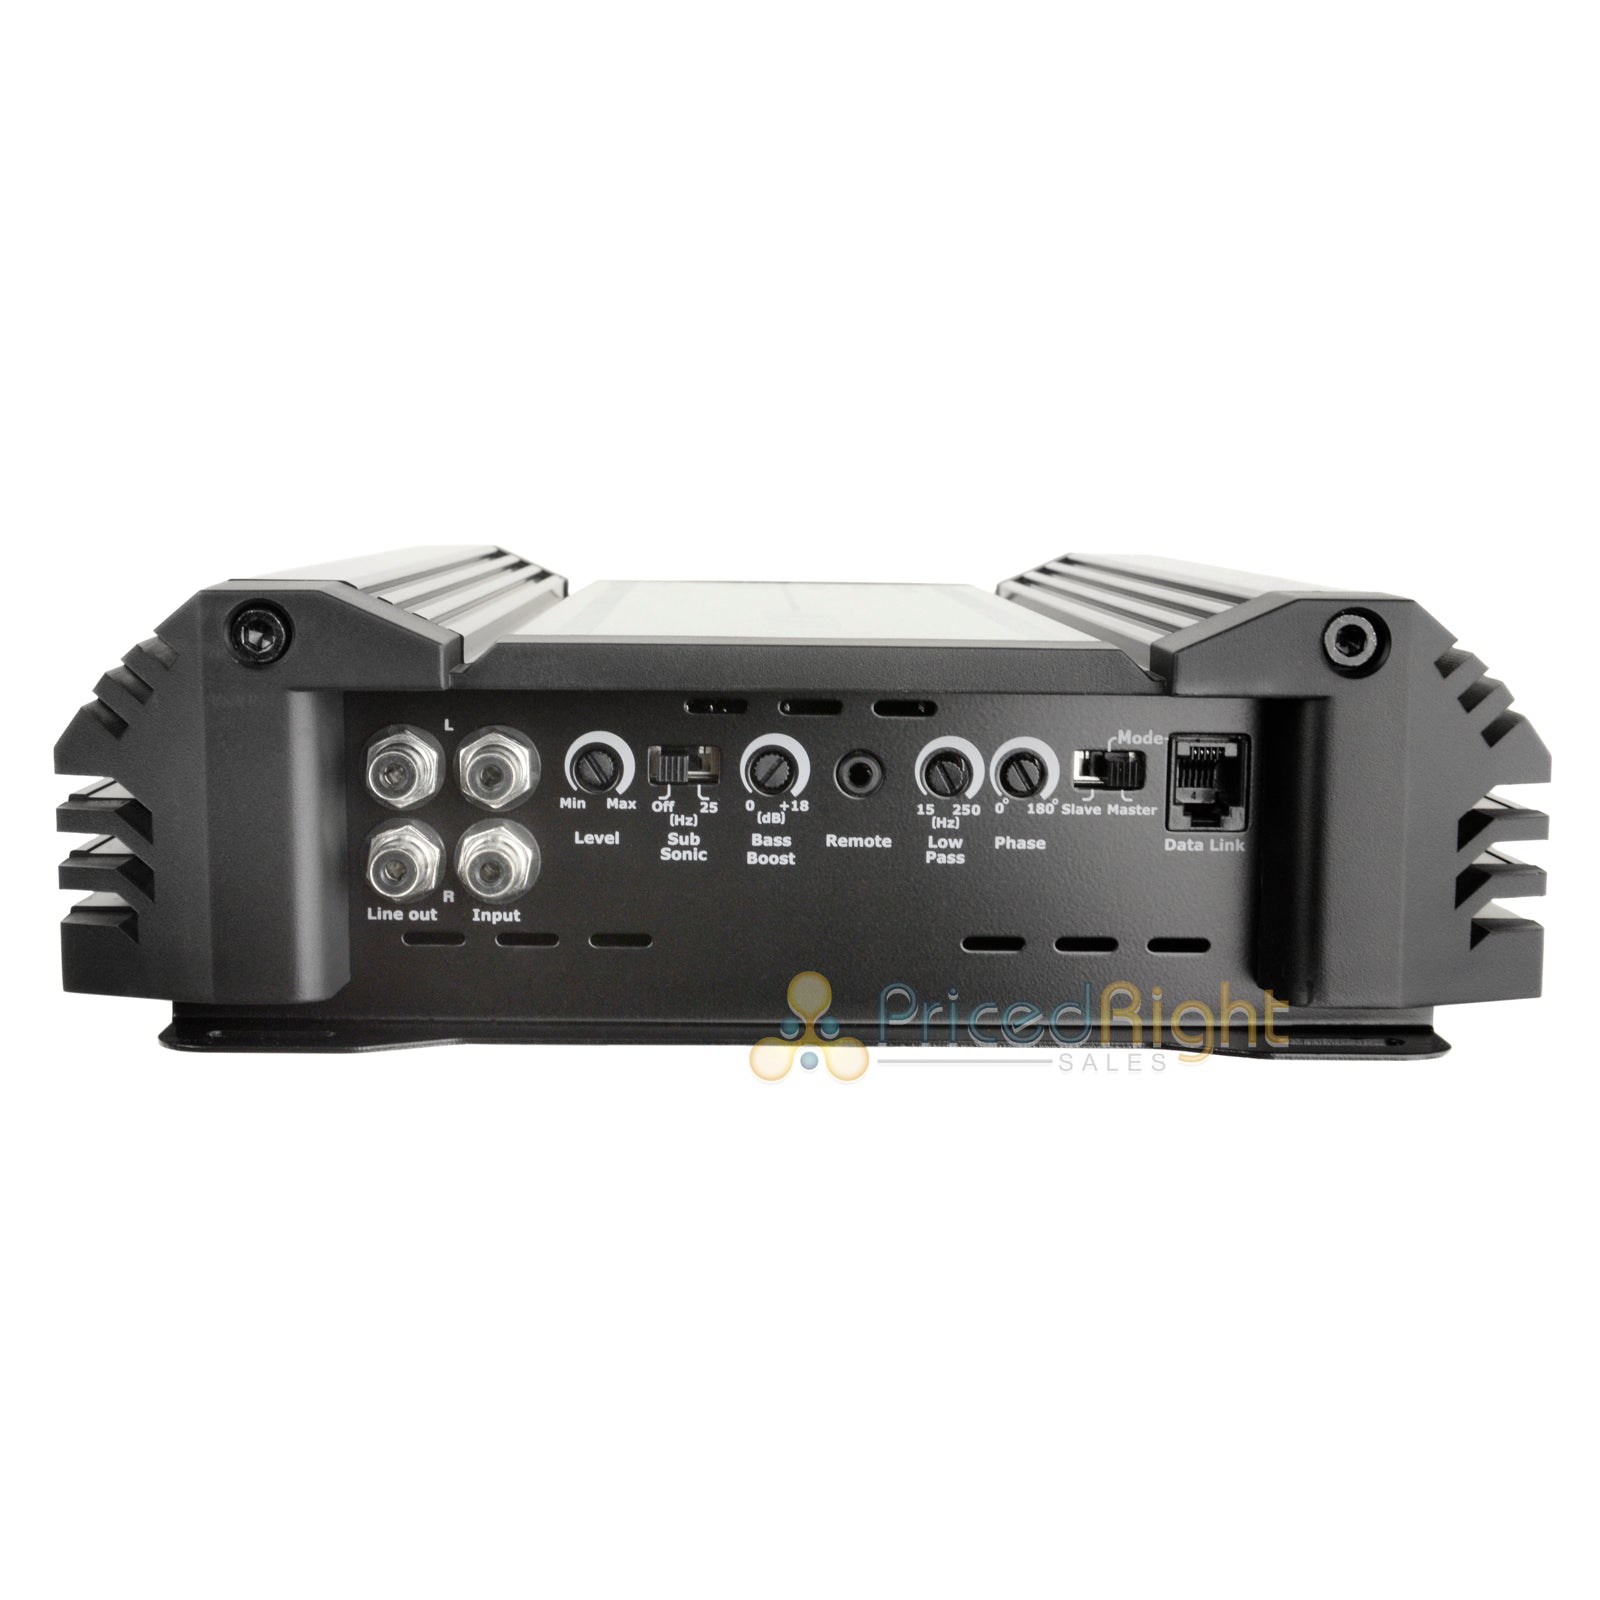 Orion Monoblock Amplifier 1500 Watts Max 4 Ohm Class D XTR Series XTR1500.1D